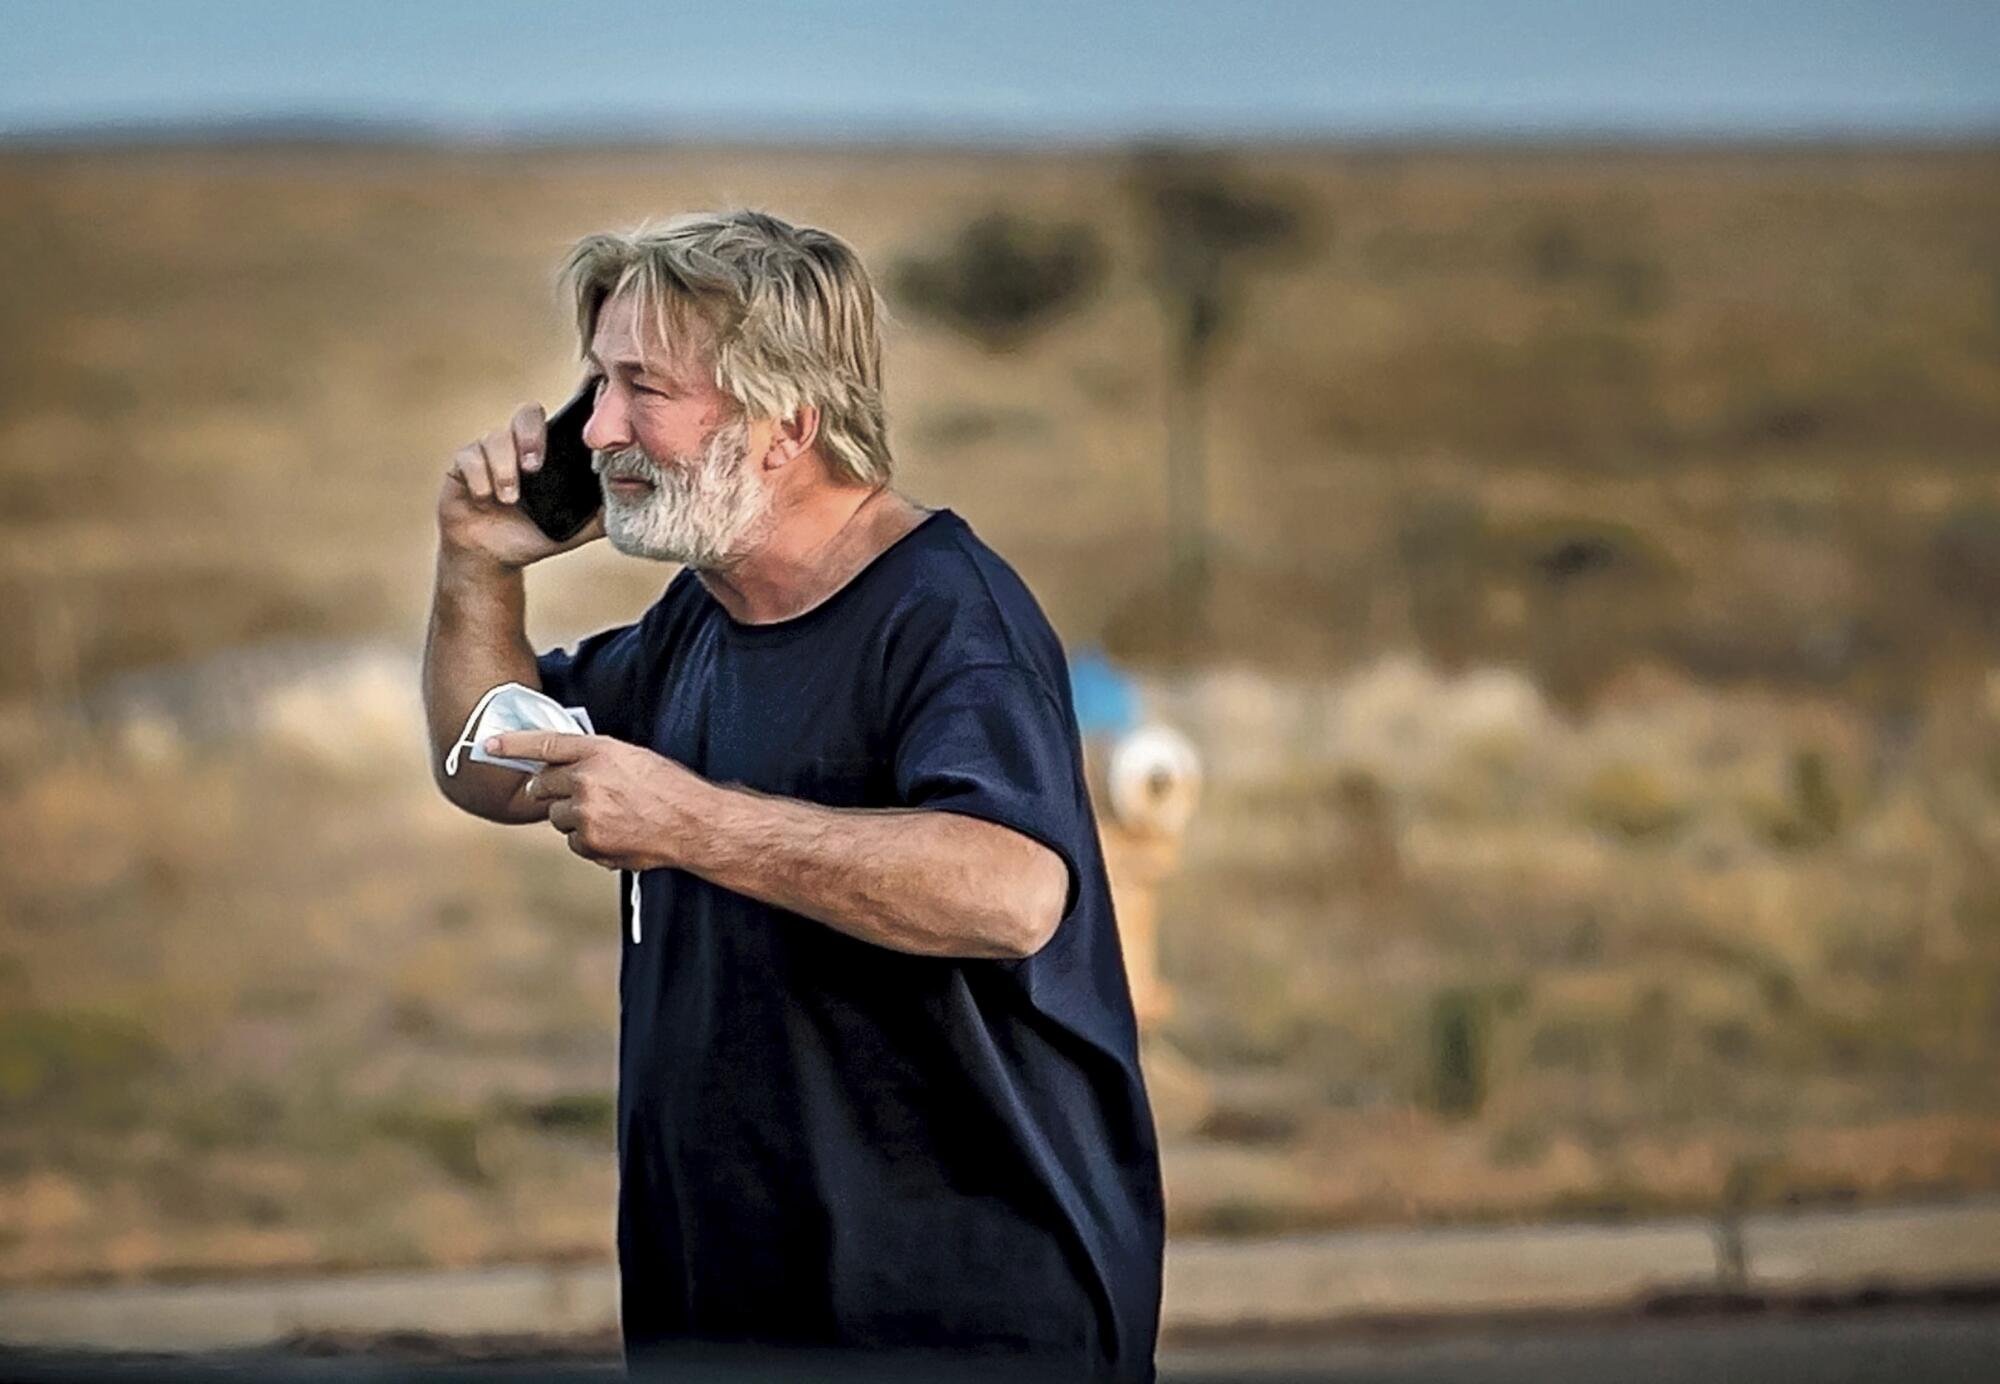 Alec Baldwin speaks on the phone outside the Santa Fe County Sheriff's Office in Santa Fe, N.M.